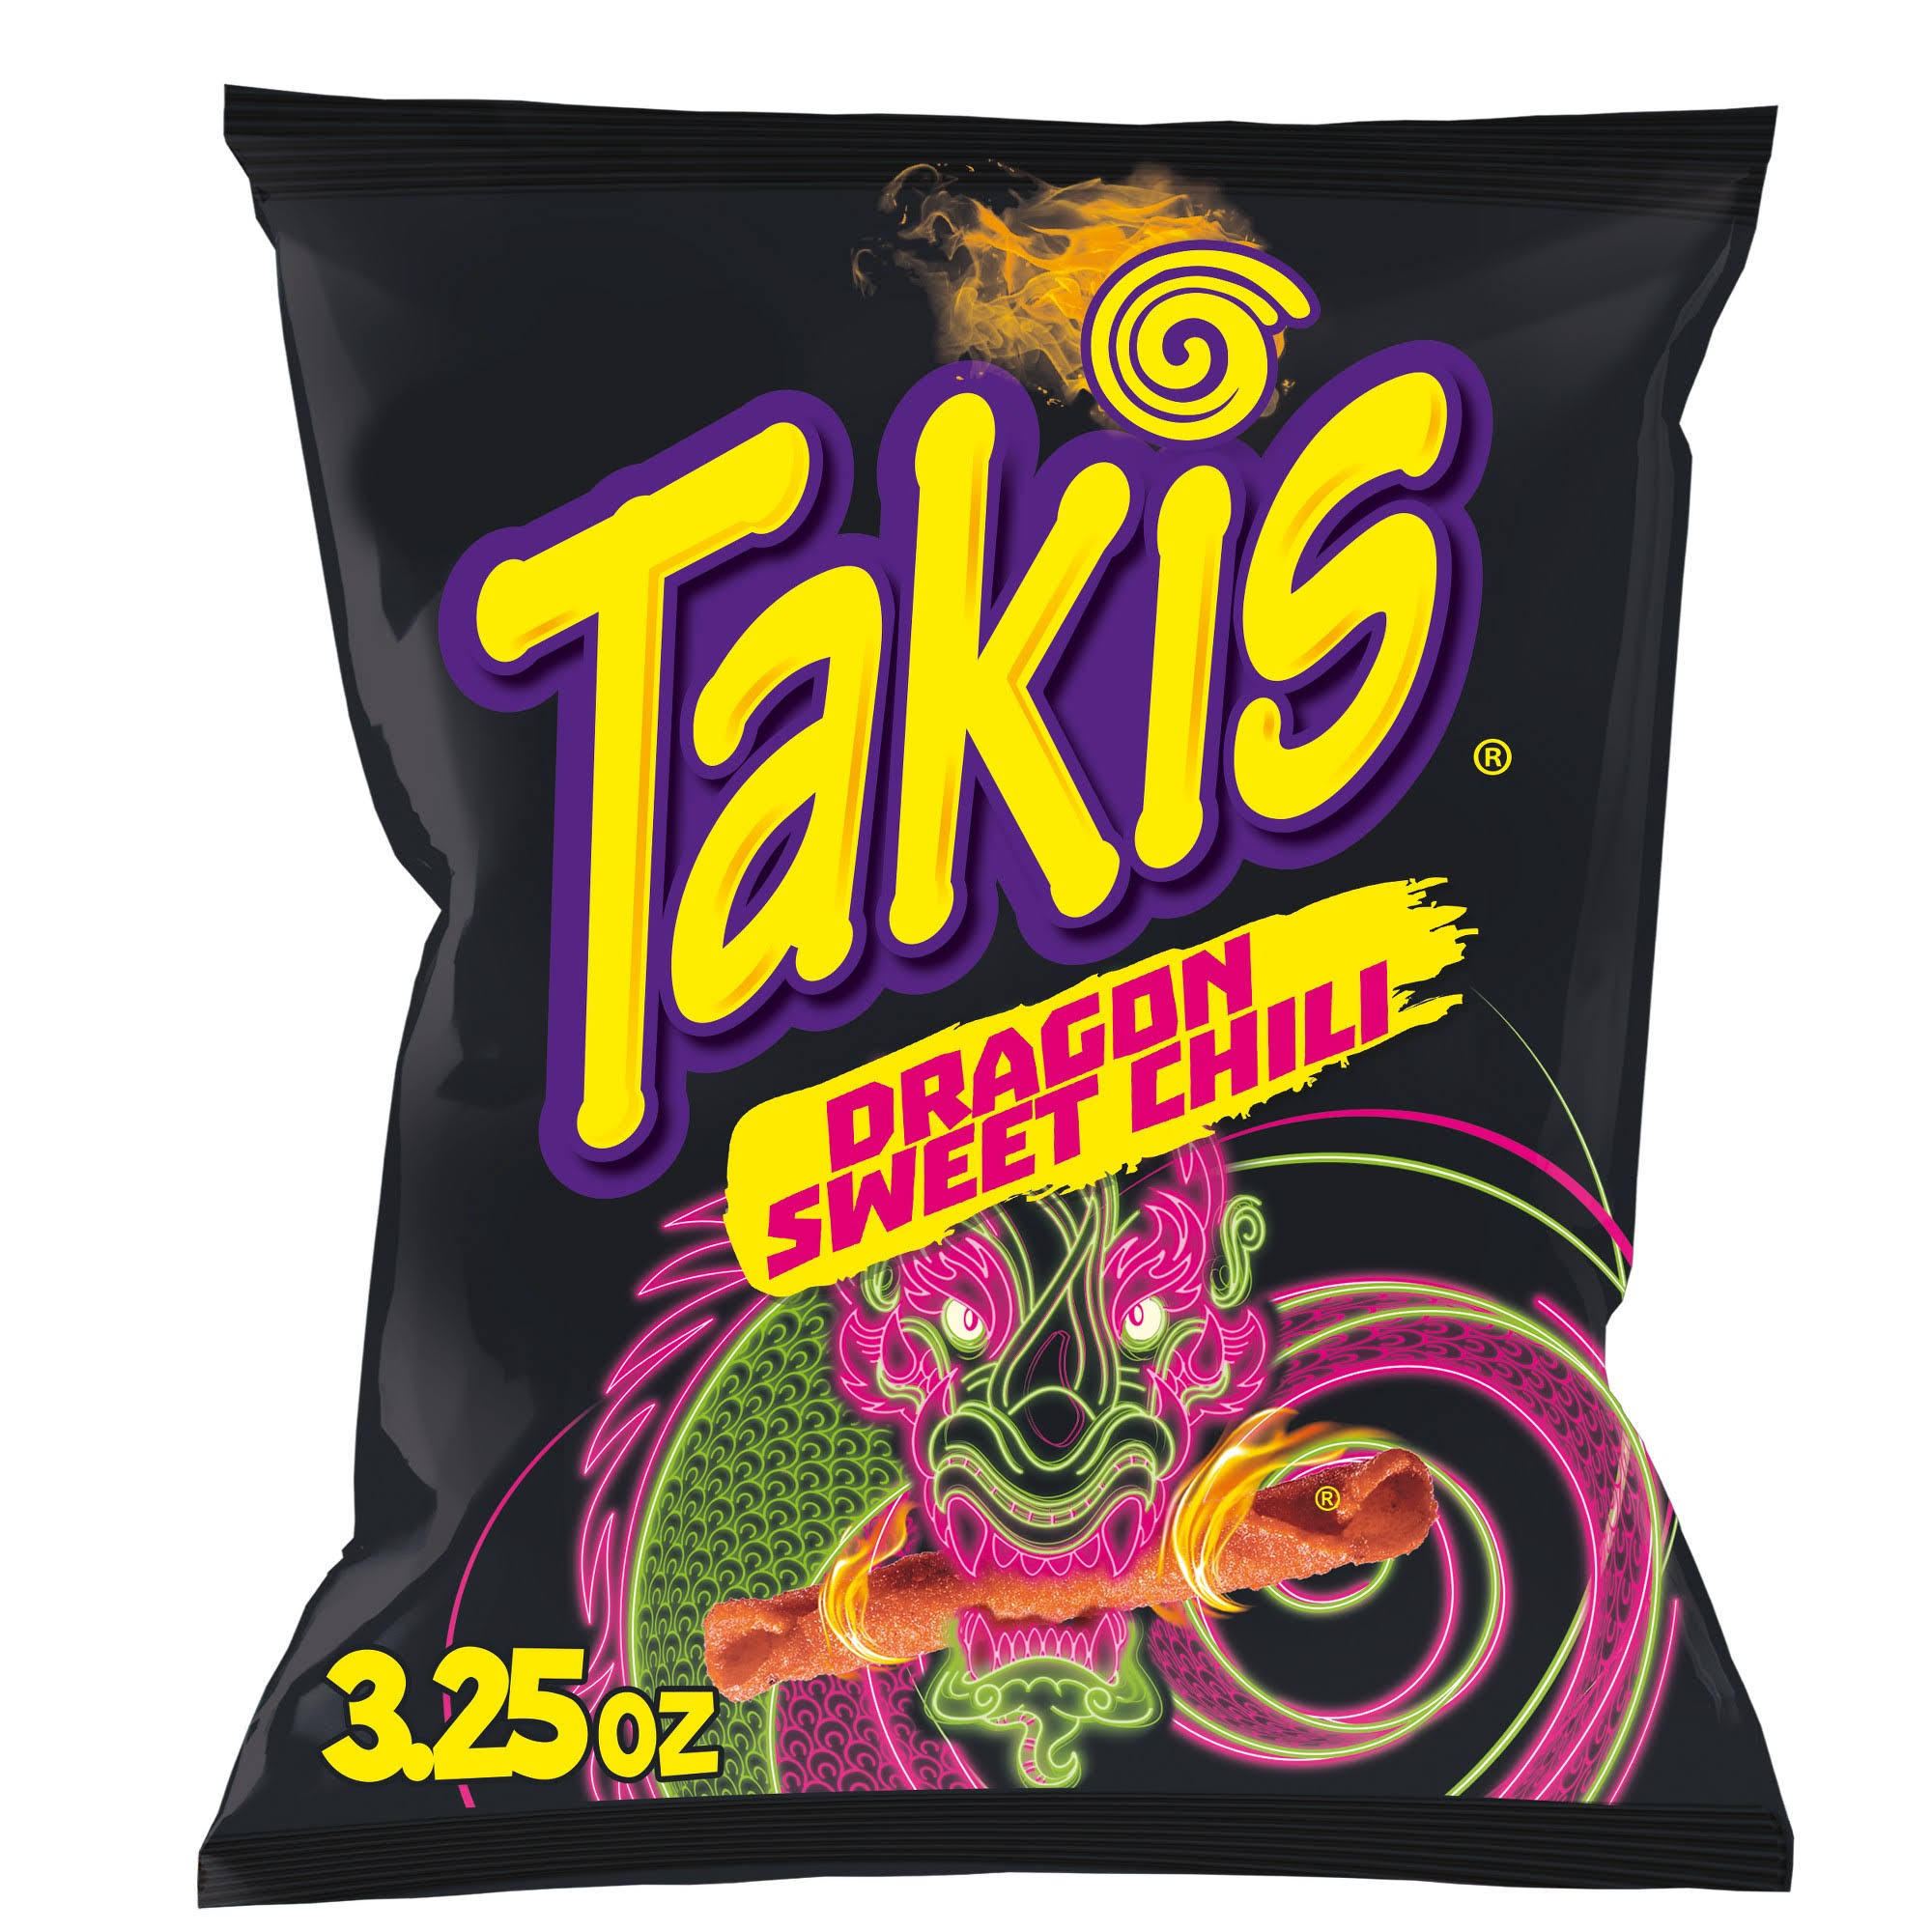 Takis Dragon Sweet Chili Tortilla Chips Bag - 3.25 oz